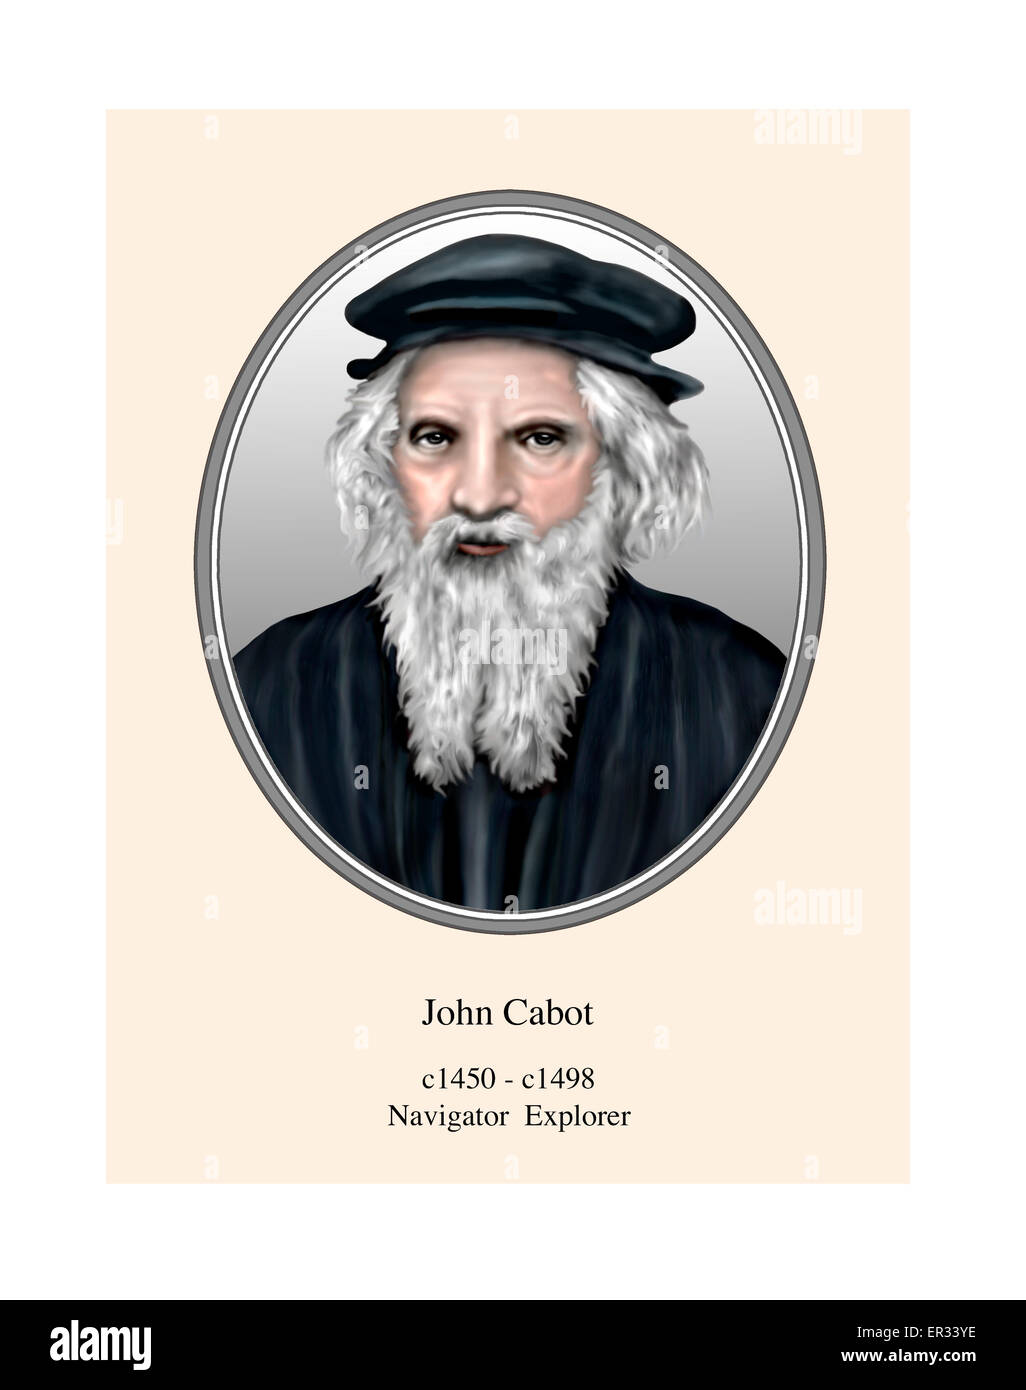 John Cabot Portrait Modern Illustration Stock Photo